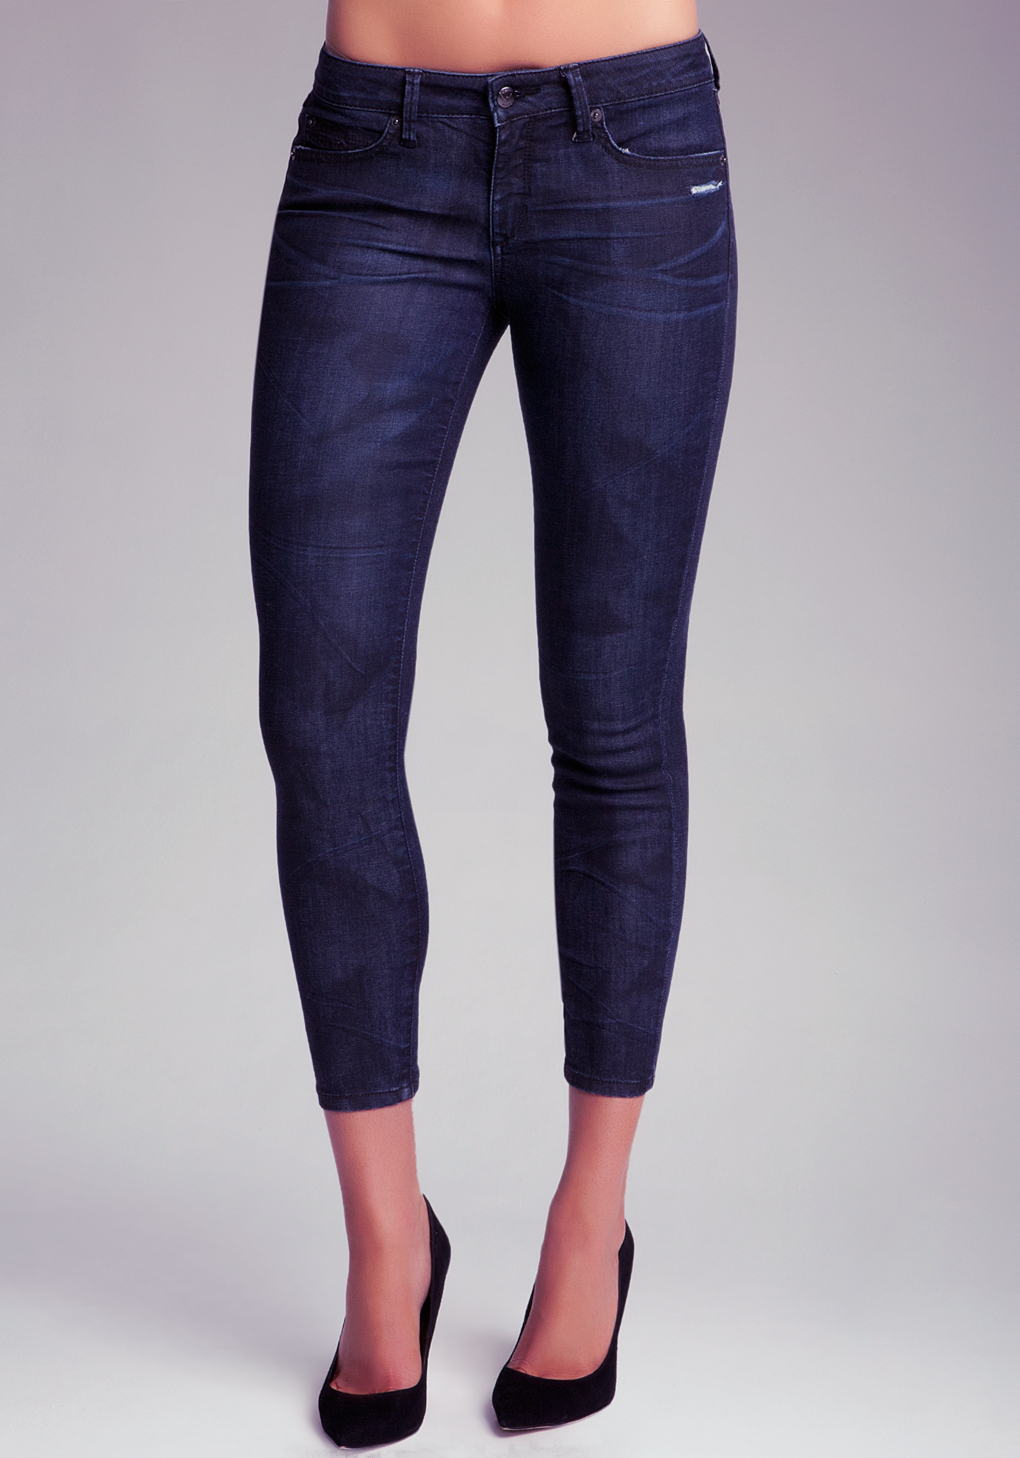 Lyst - Bebe Back Zip Skinny Jeans in Blue